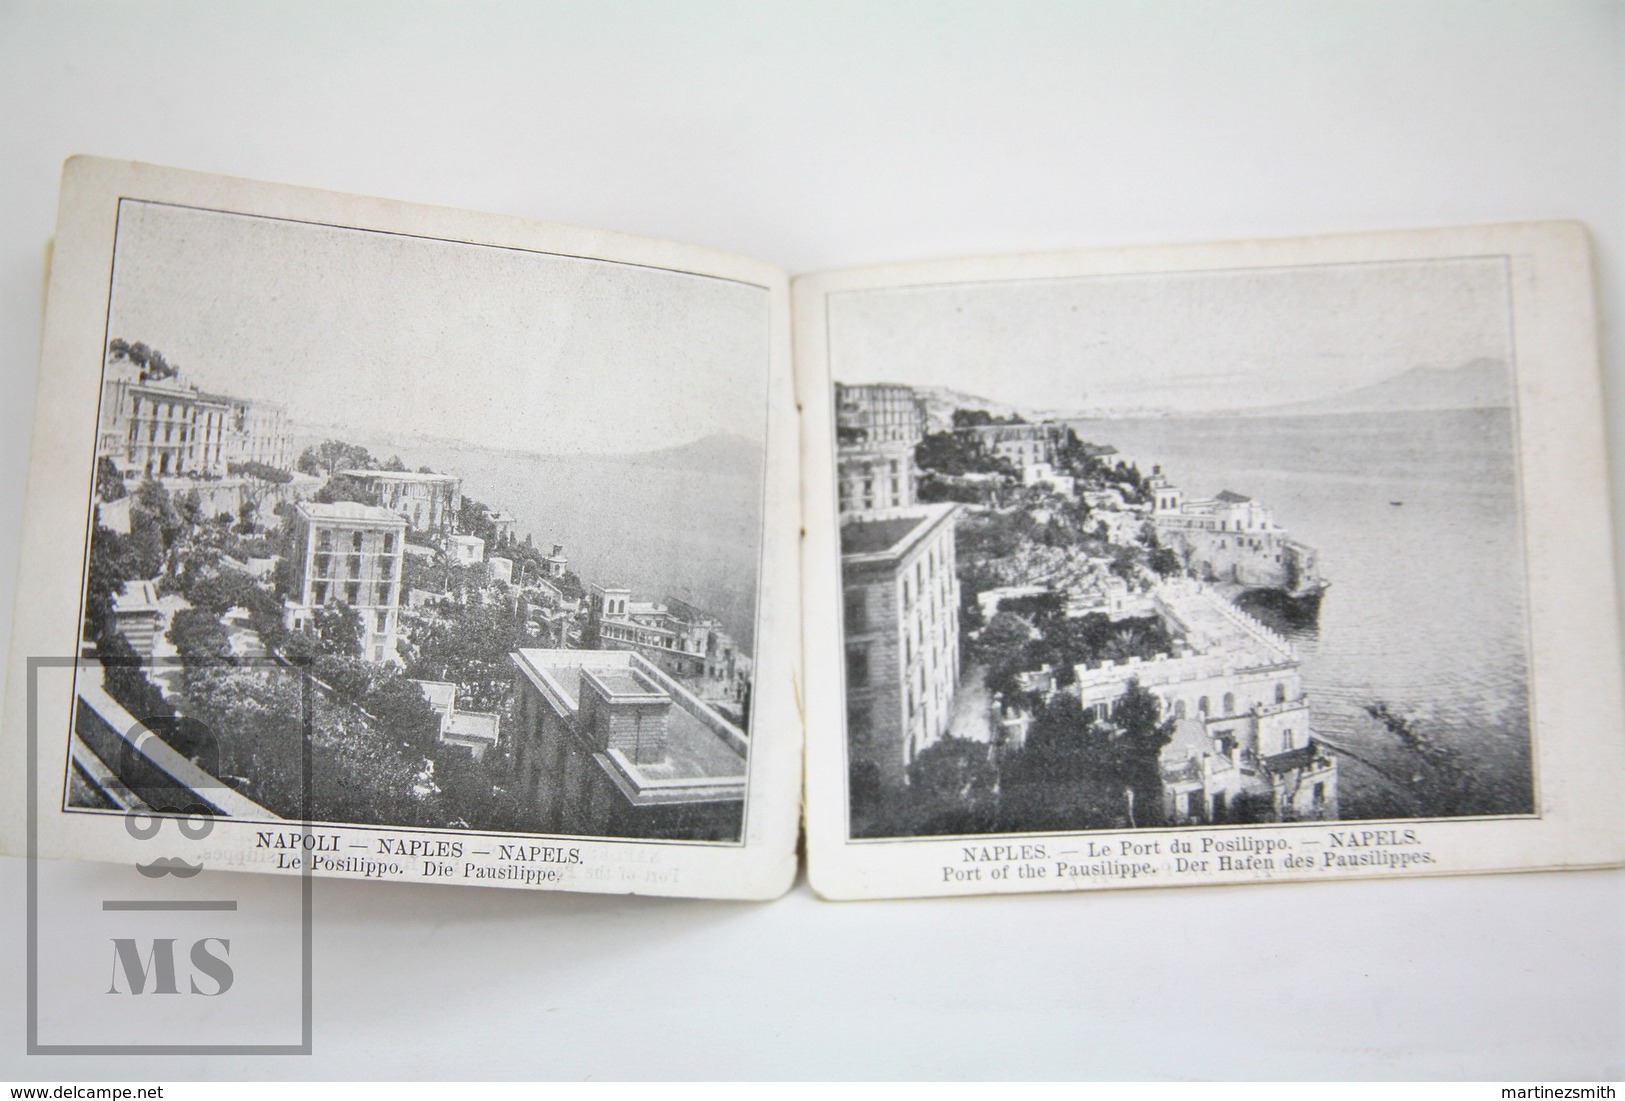 Old Trading Card Folder - Cacao Bensdorp Advertising - Voyage Autor Du Monde - Naples, Milan - Andere & Zonder Classificatie